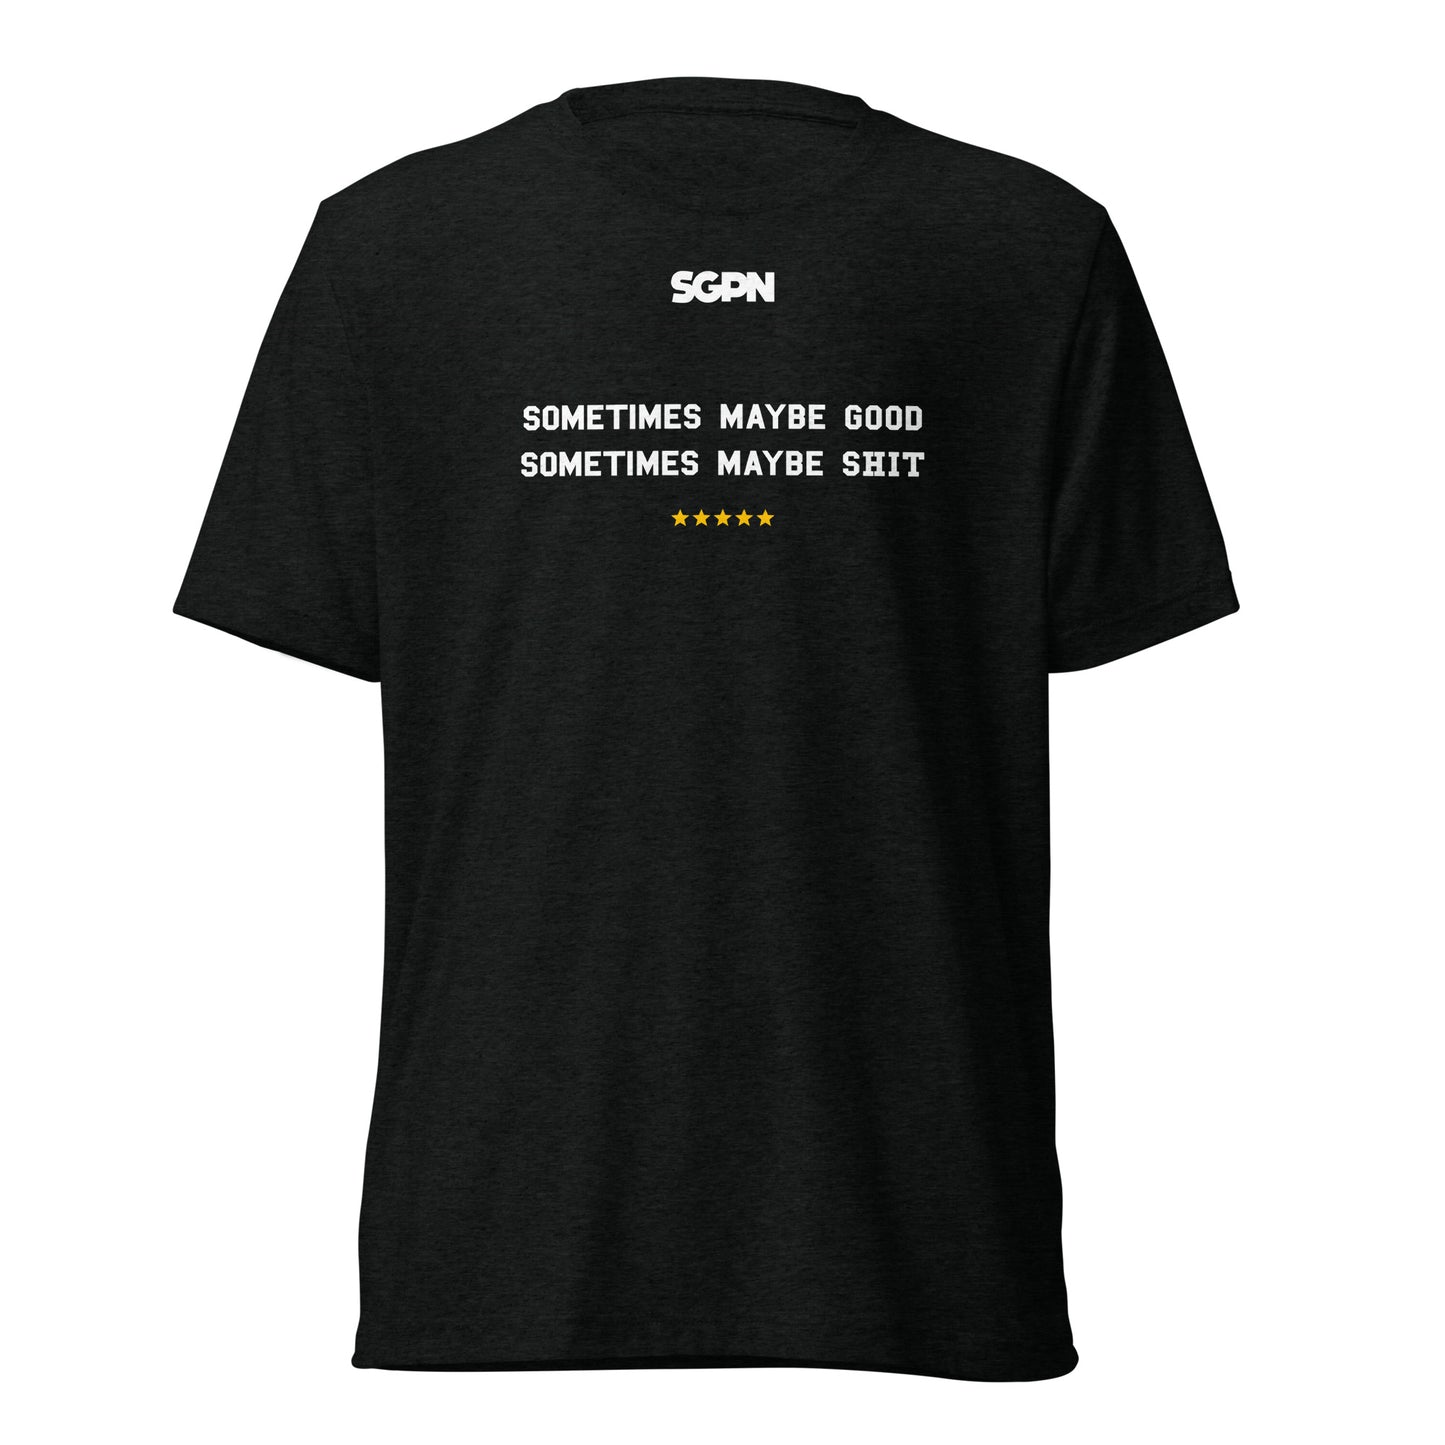 Sometimes Maybe Good, Sometimes Maybe Shit - Short sleeve t-shirt